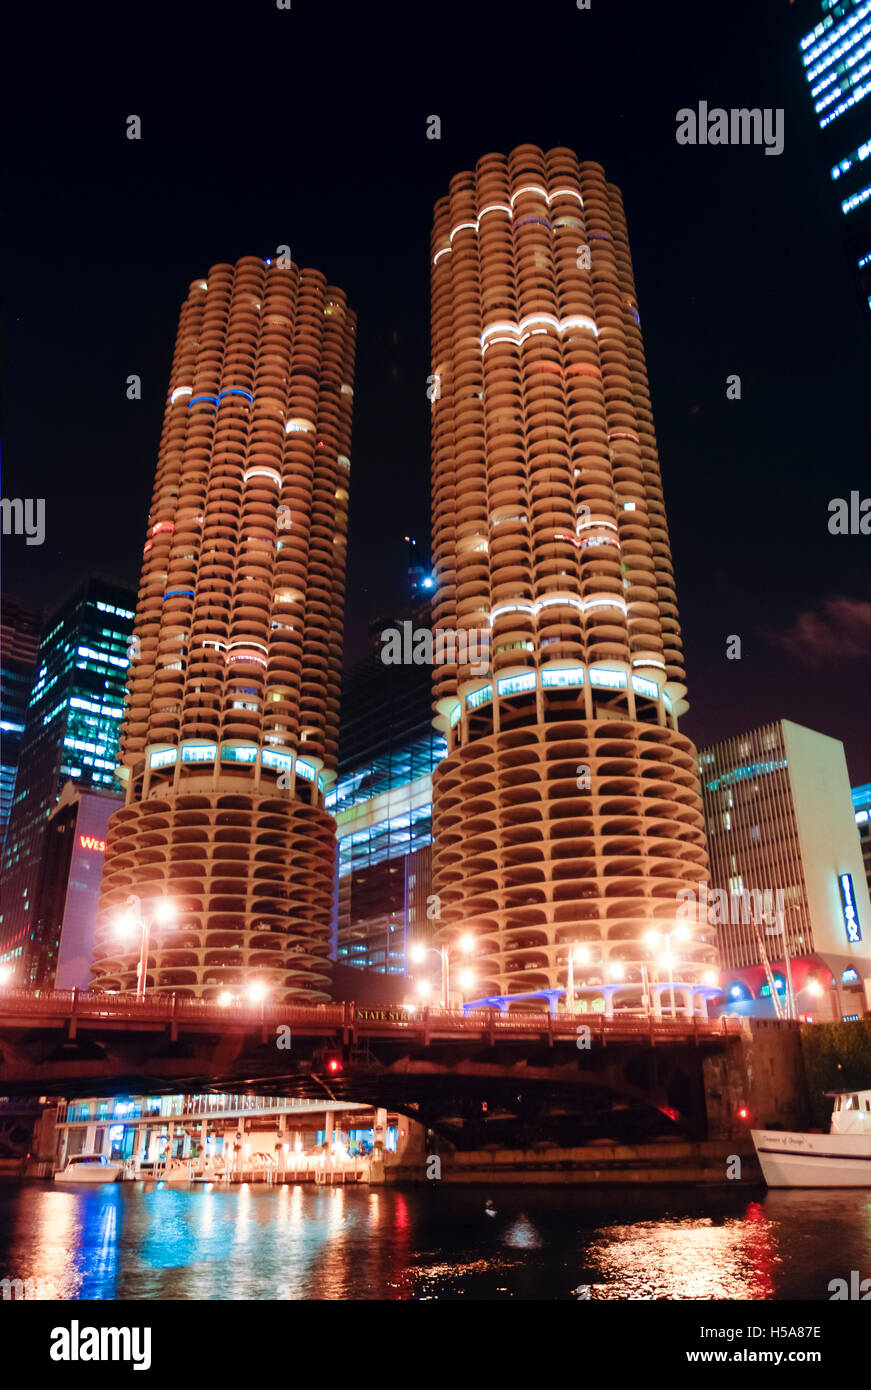 'Corn cob' buildings in Chicago, Illinois Stock Photo